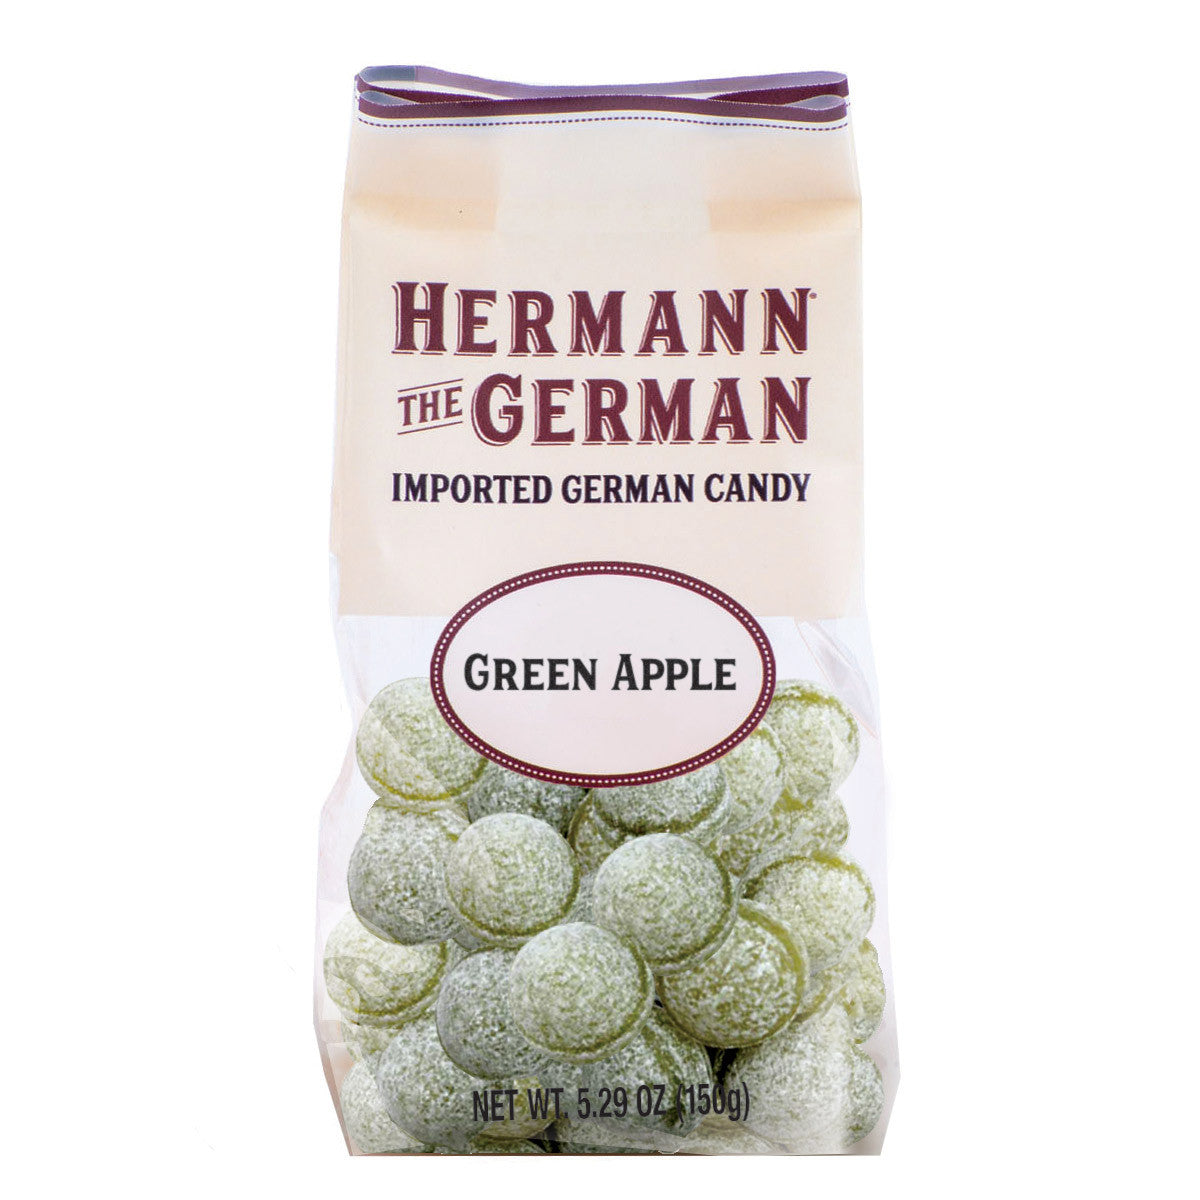 Hermann the German Green Apple Candy, 5.29 oz.